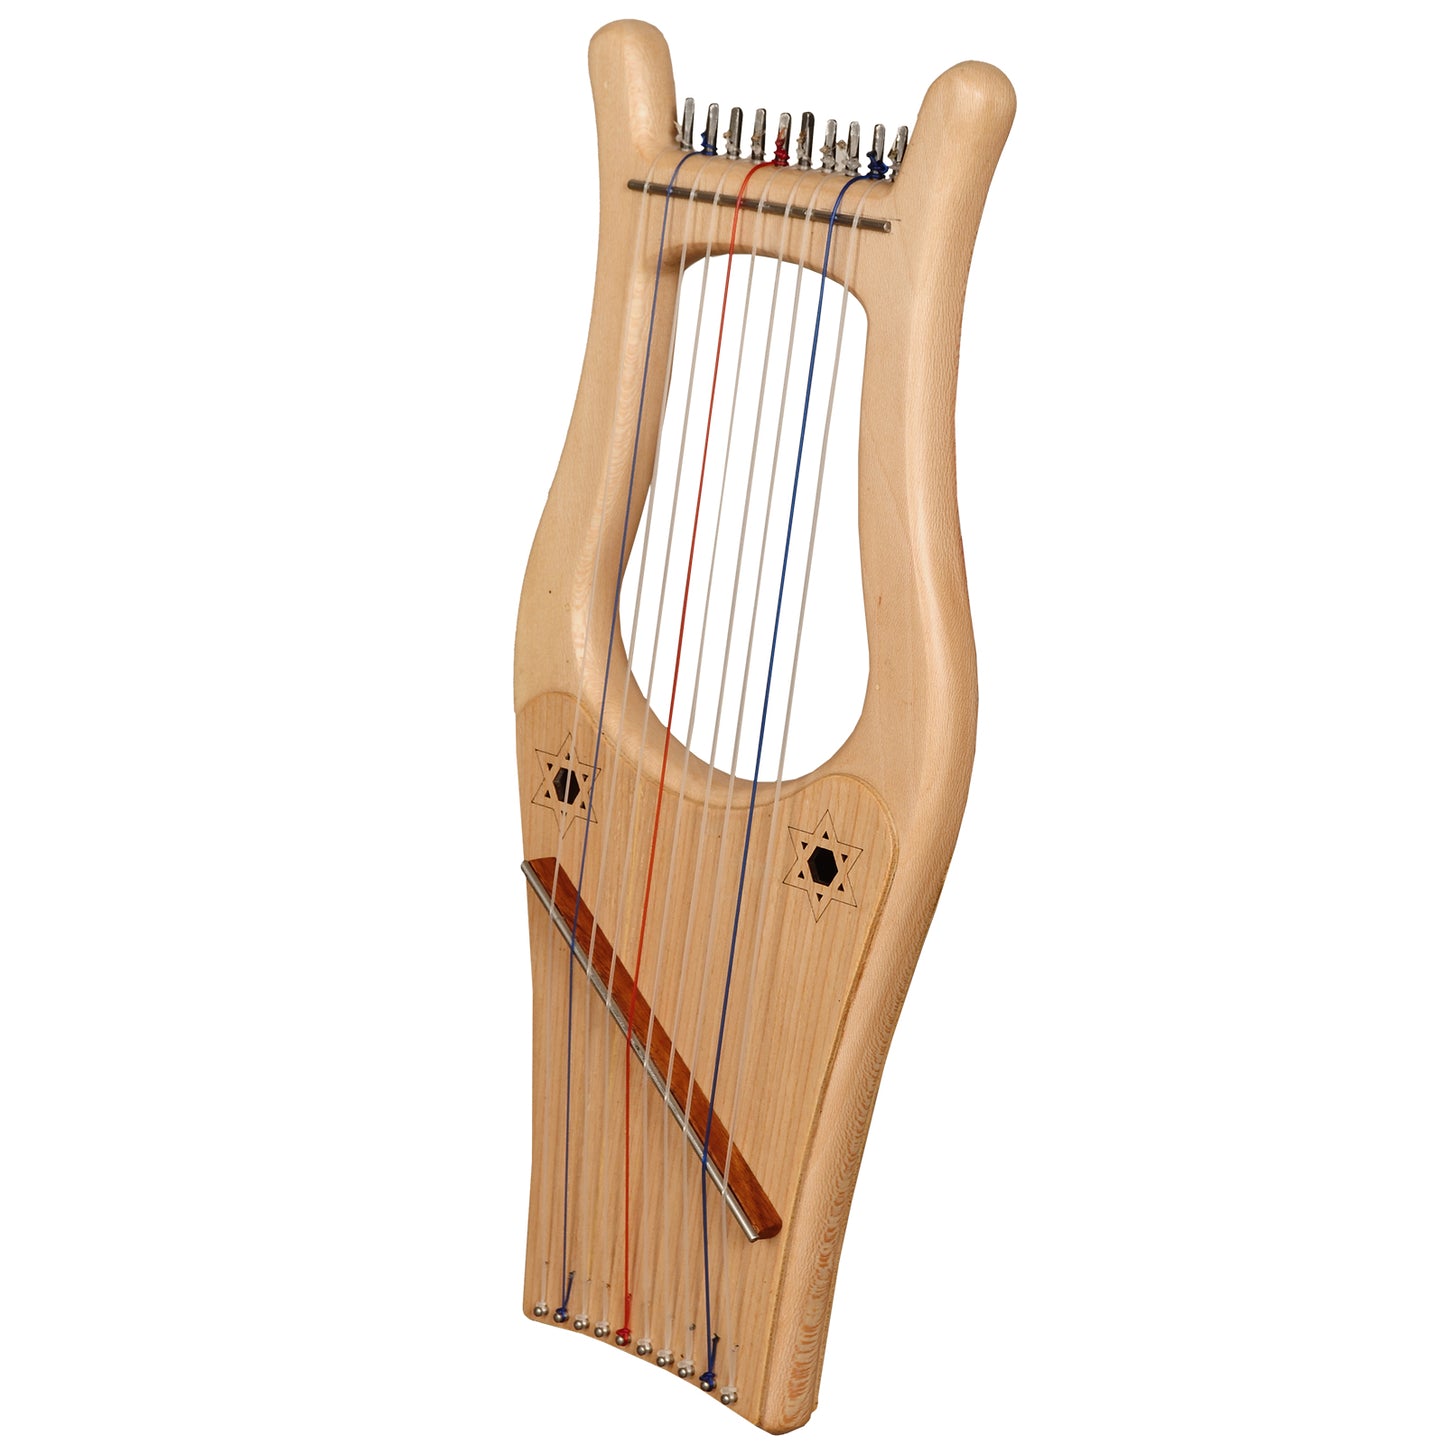 Mini-Kinnor-Harfe, 10-saitiges Spitzenholz